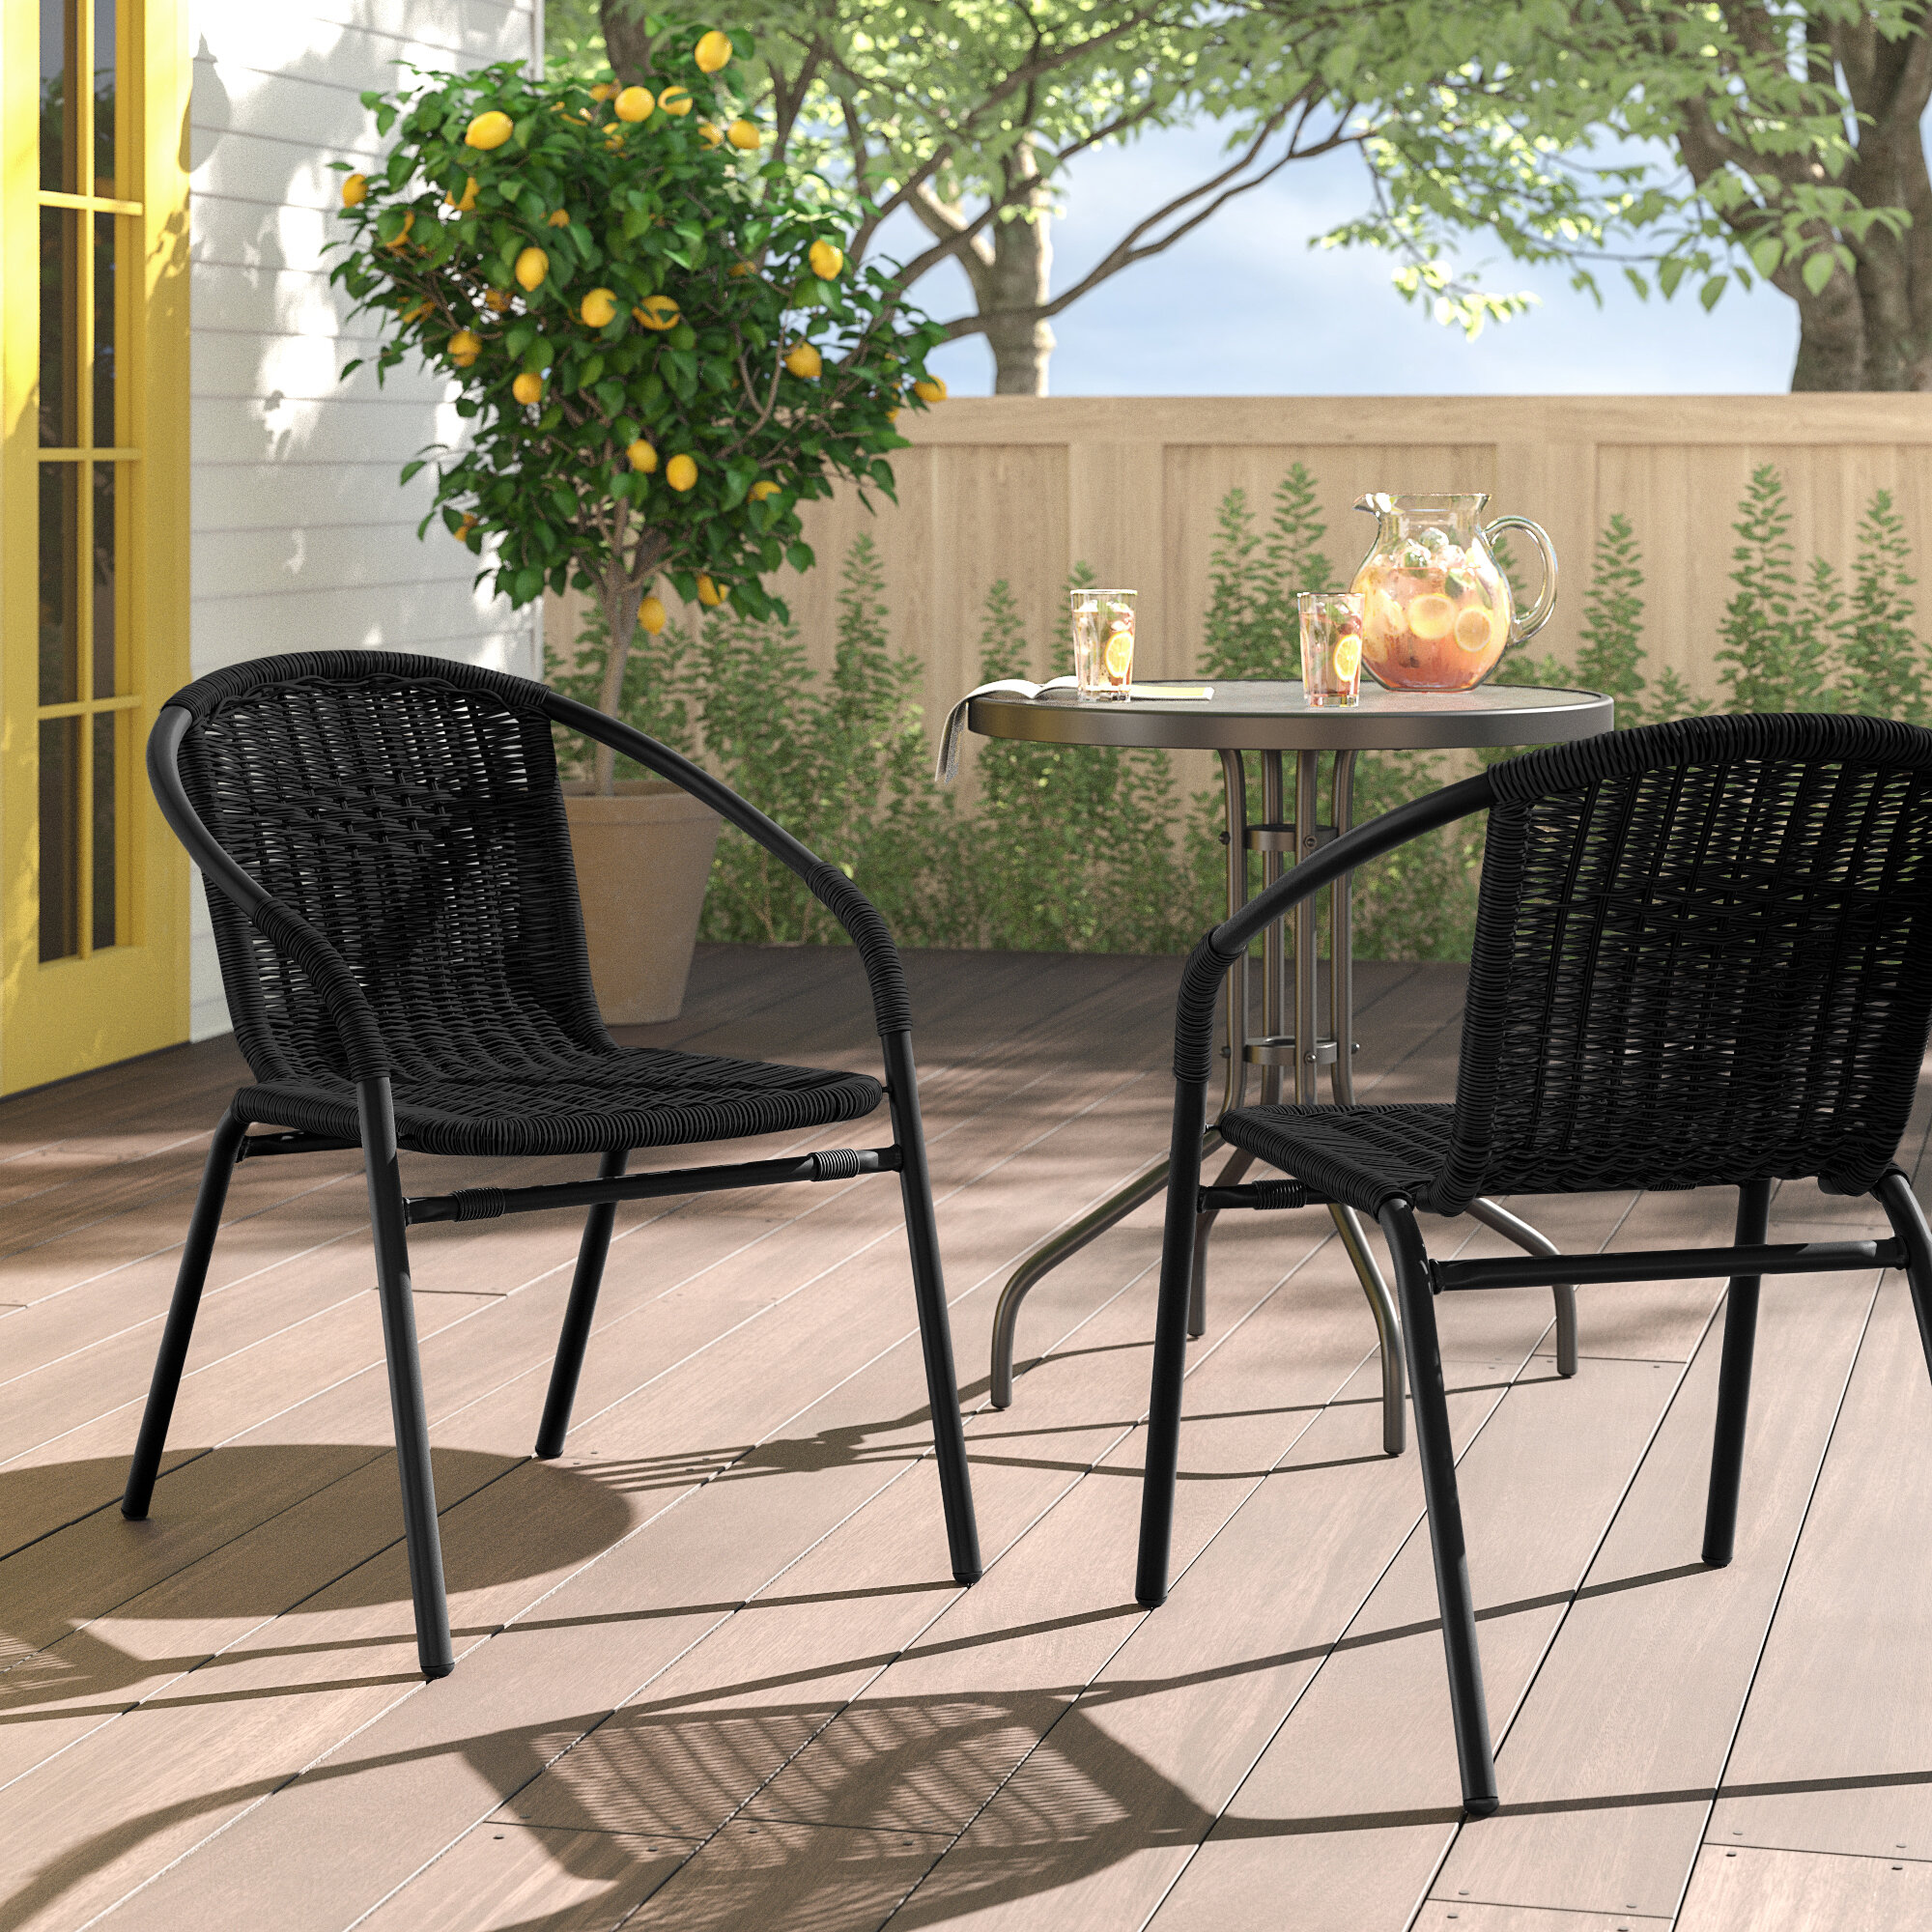 Outdoor Garden Furniture Stacking Chair Metal Patio Set Decking Dining Seat 